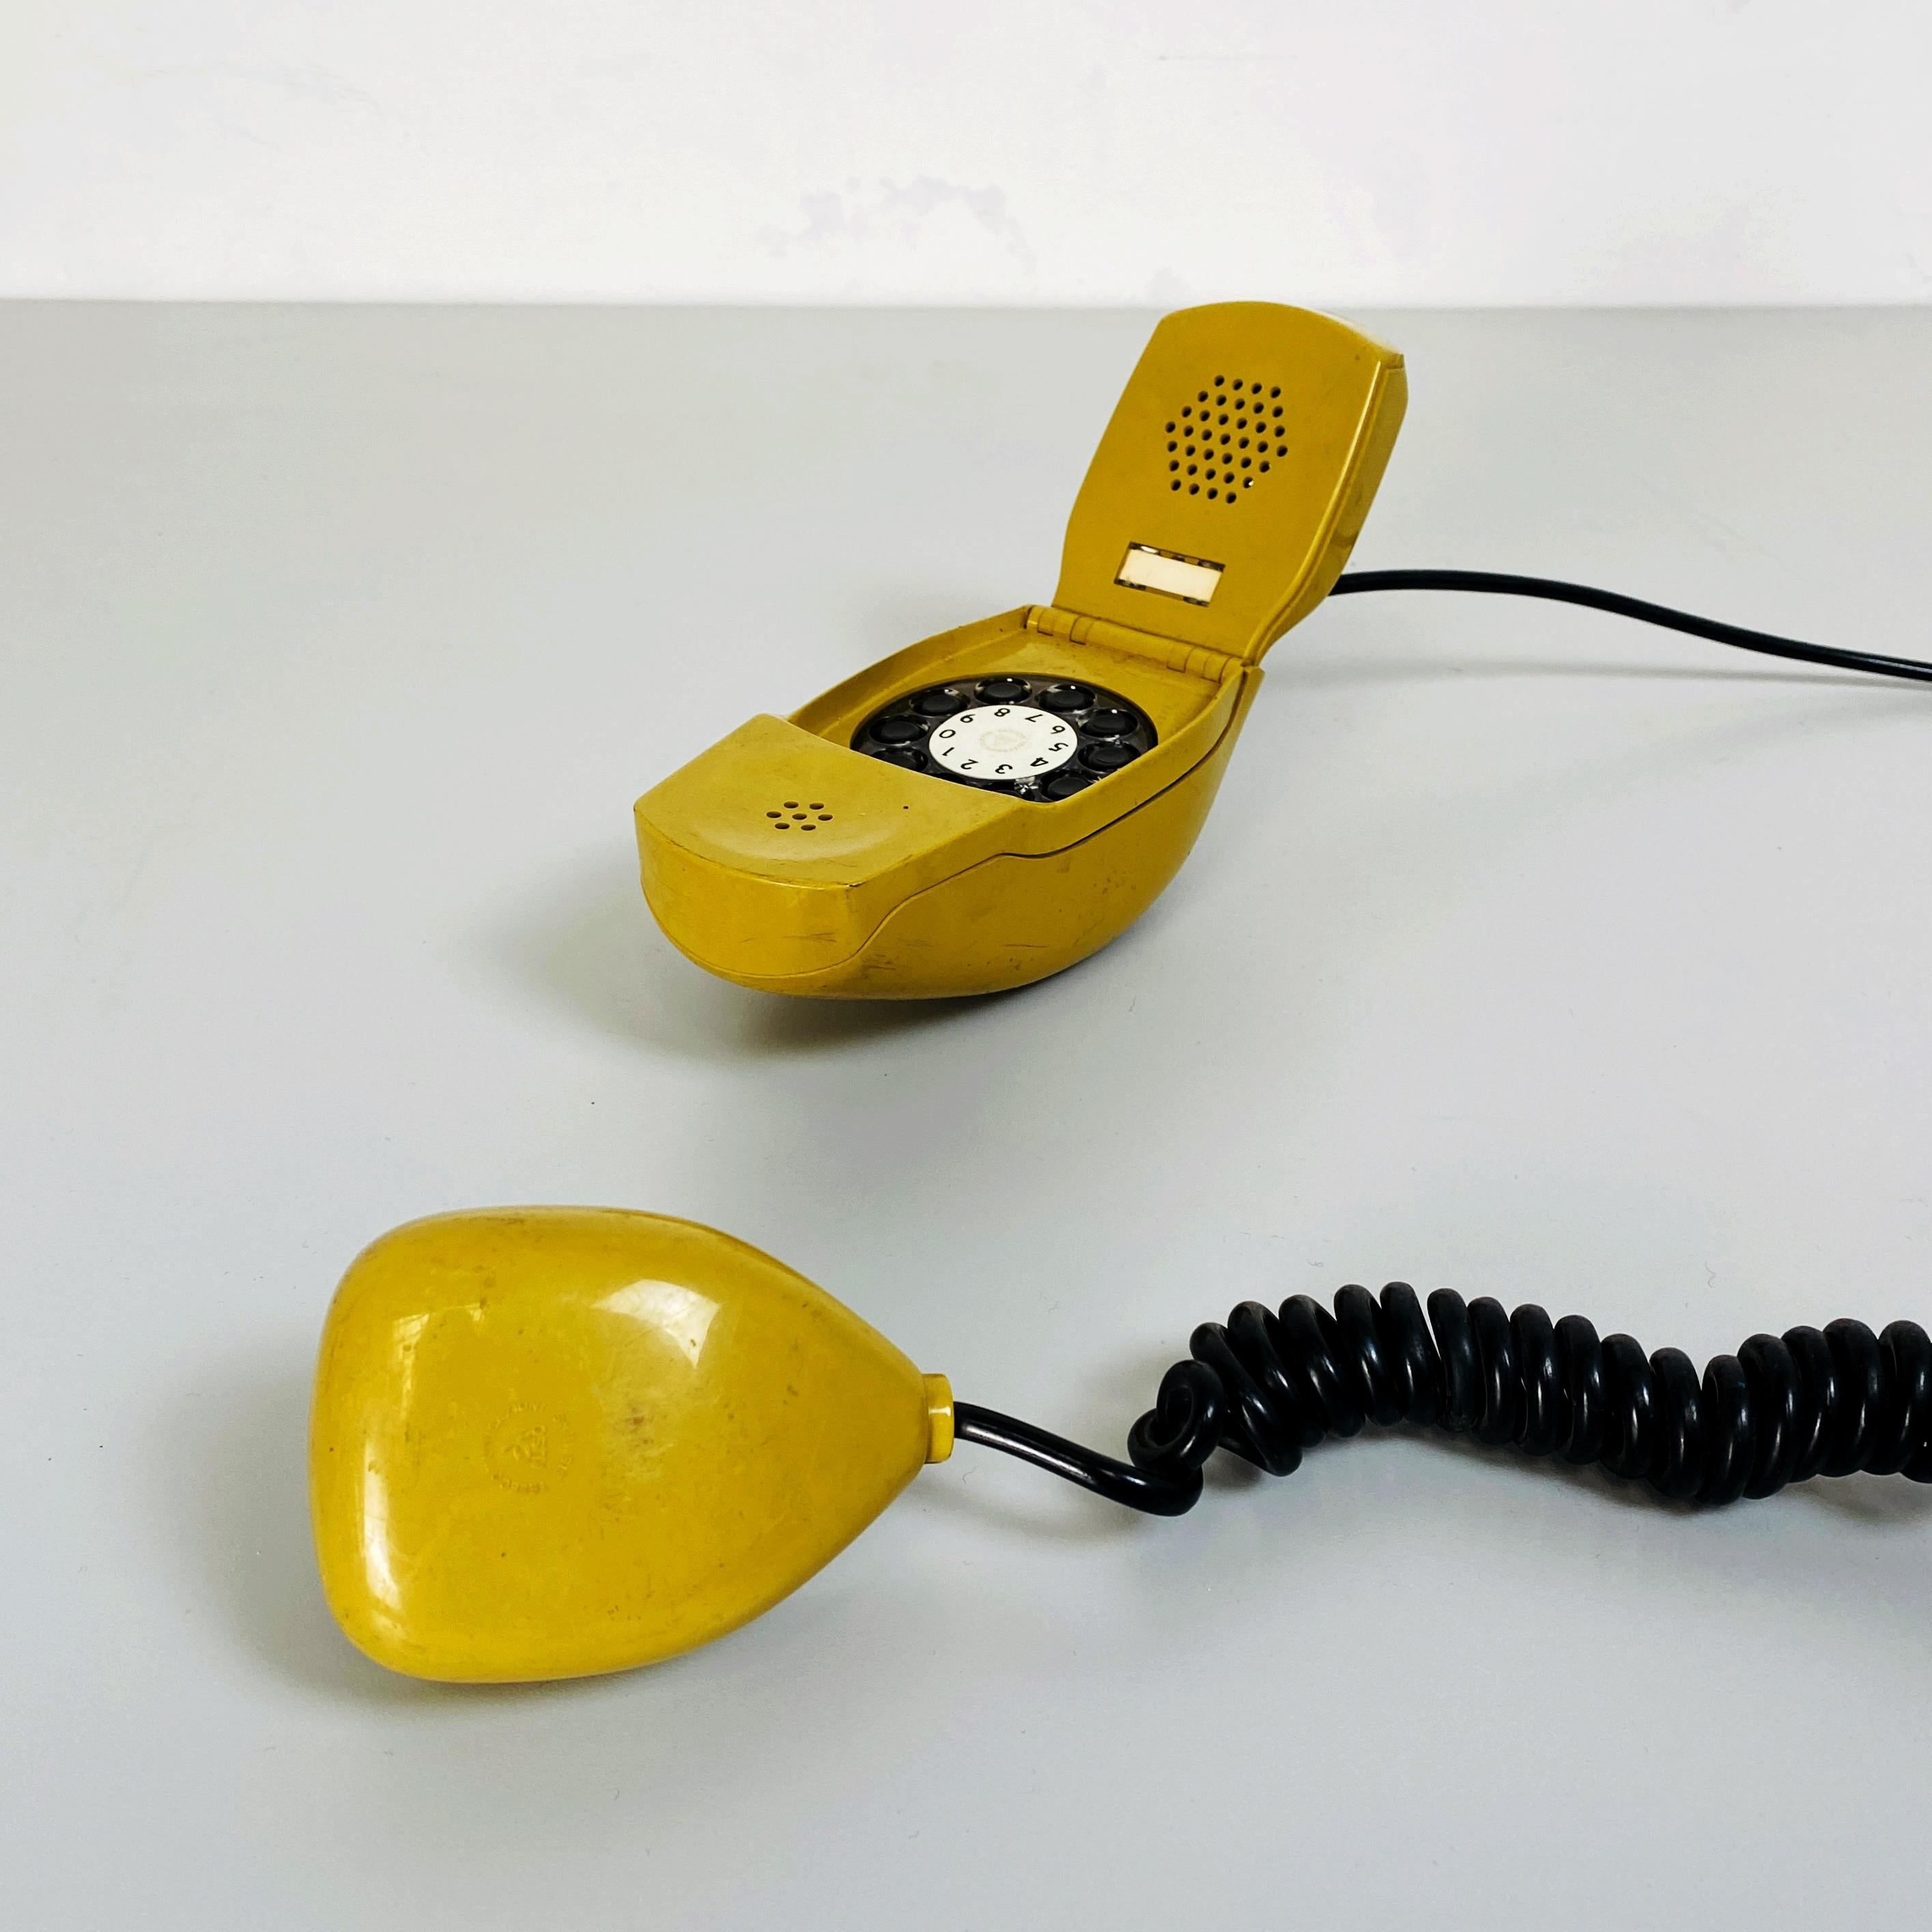 Italian Yellow Telephone Grillo by Marco Zanuso and Richard Sapper for Siemens, 1965